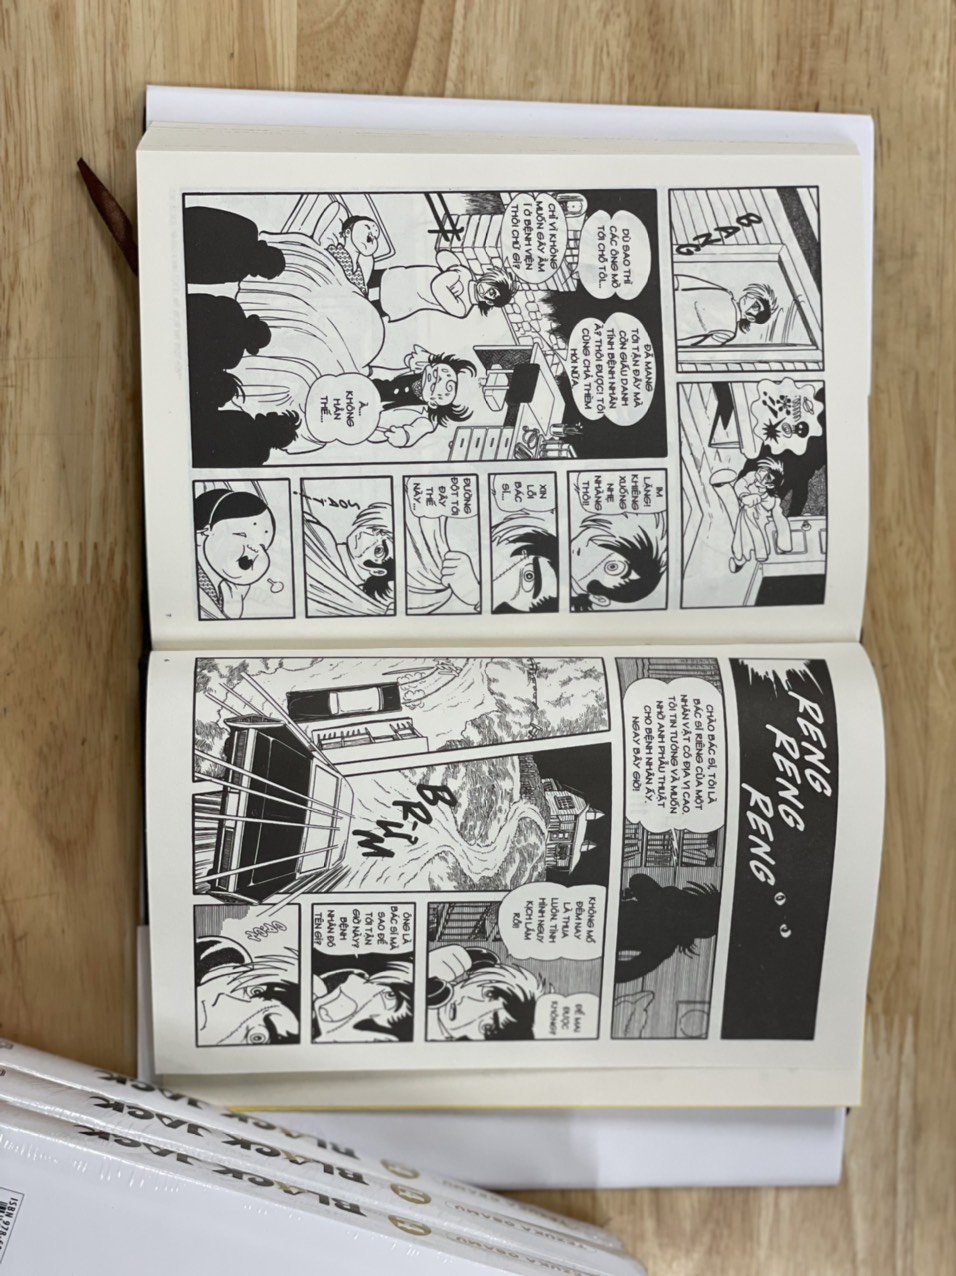 [Bìa cứng] BLACK JACK 14 - Osamu Tezuka – NXB Trẻ